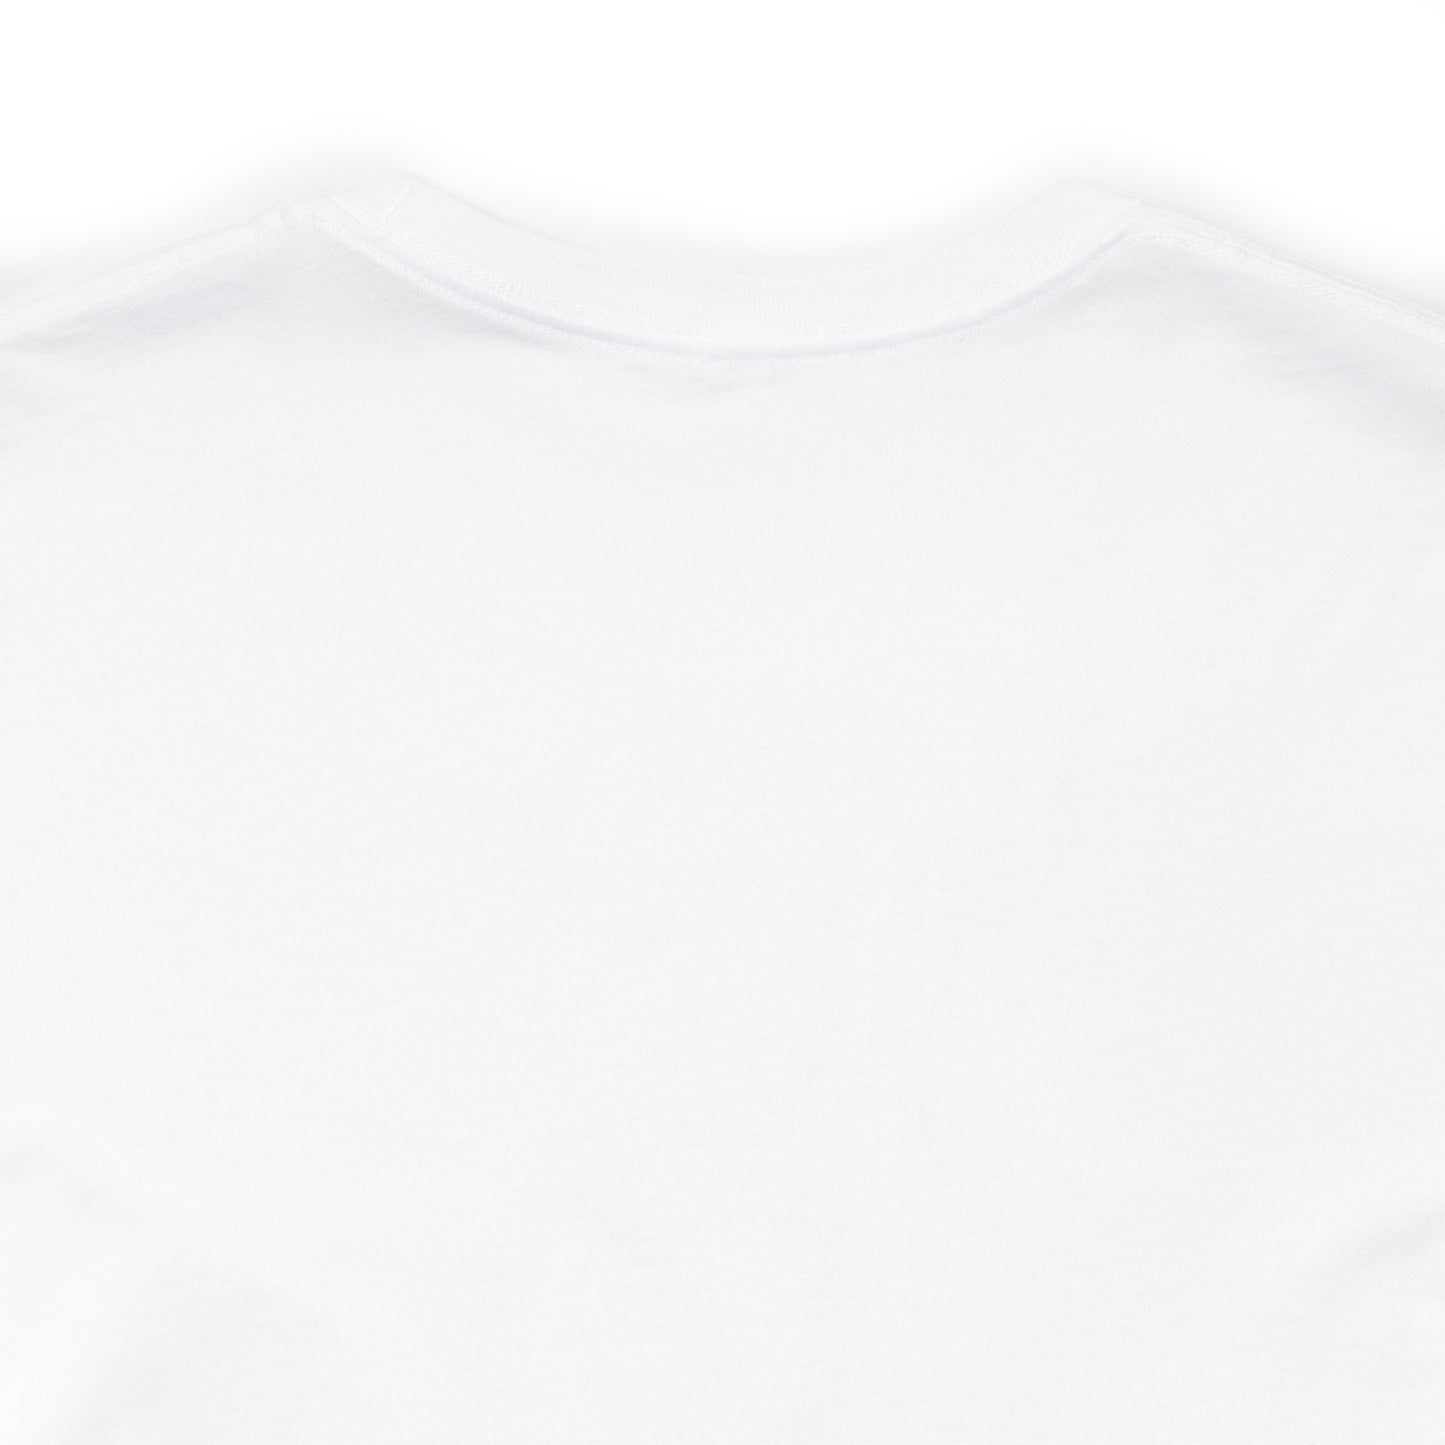 AOTD Large Logo T-Shirt (US)